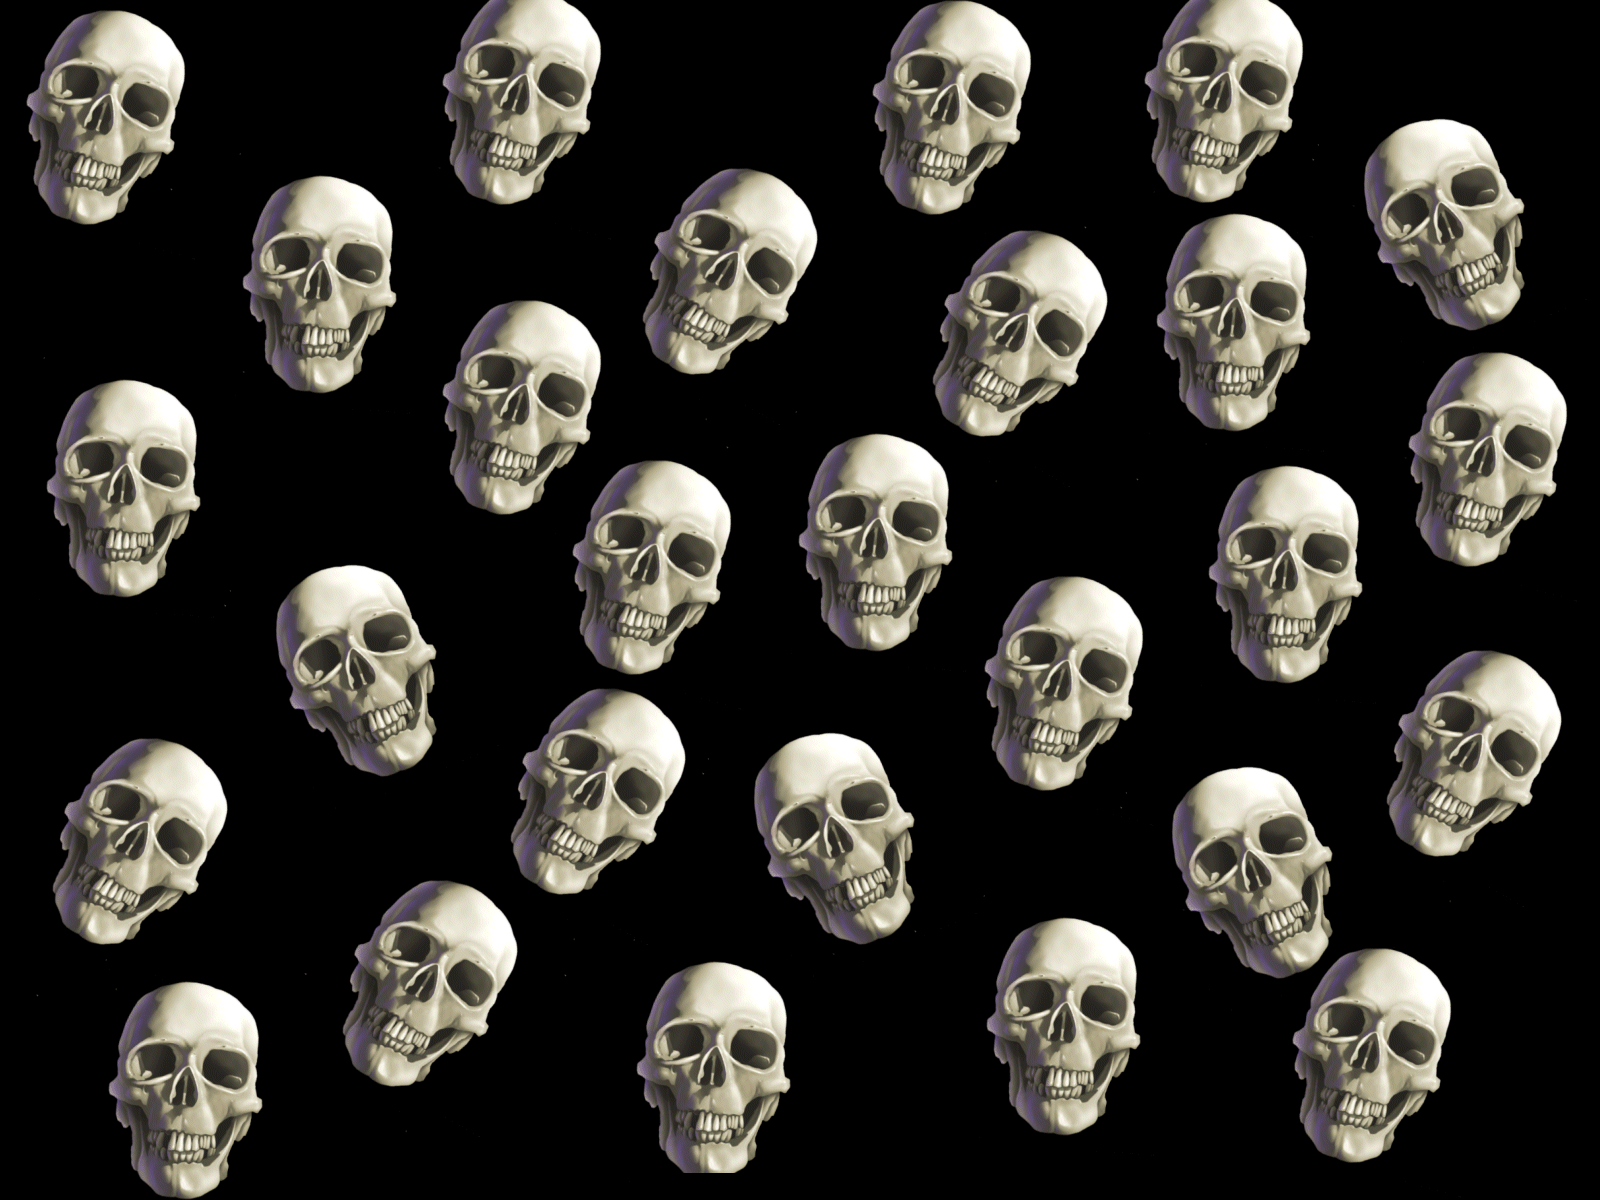 Skull Tumblr Wallpapers